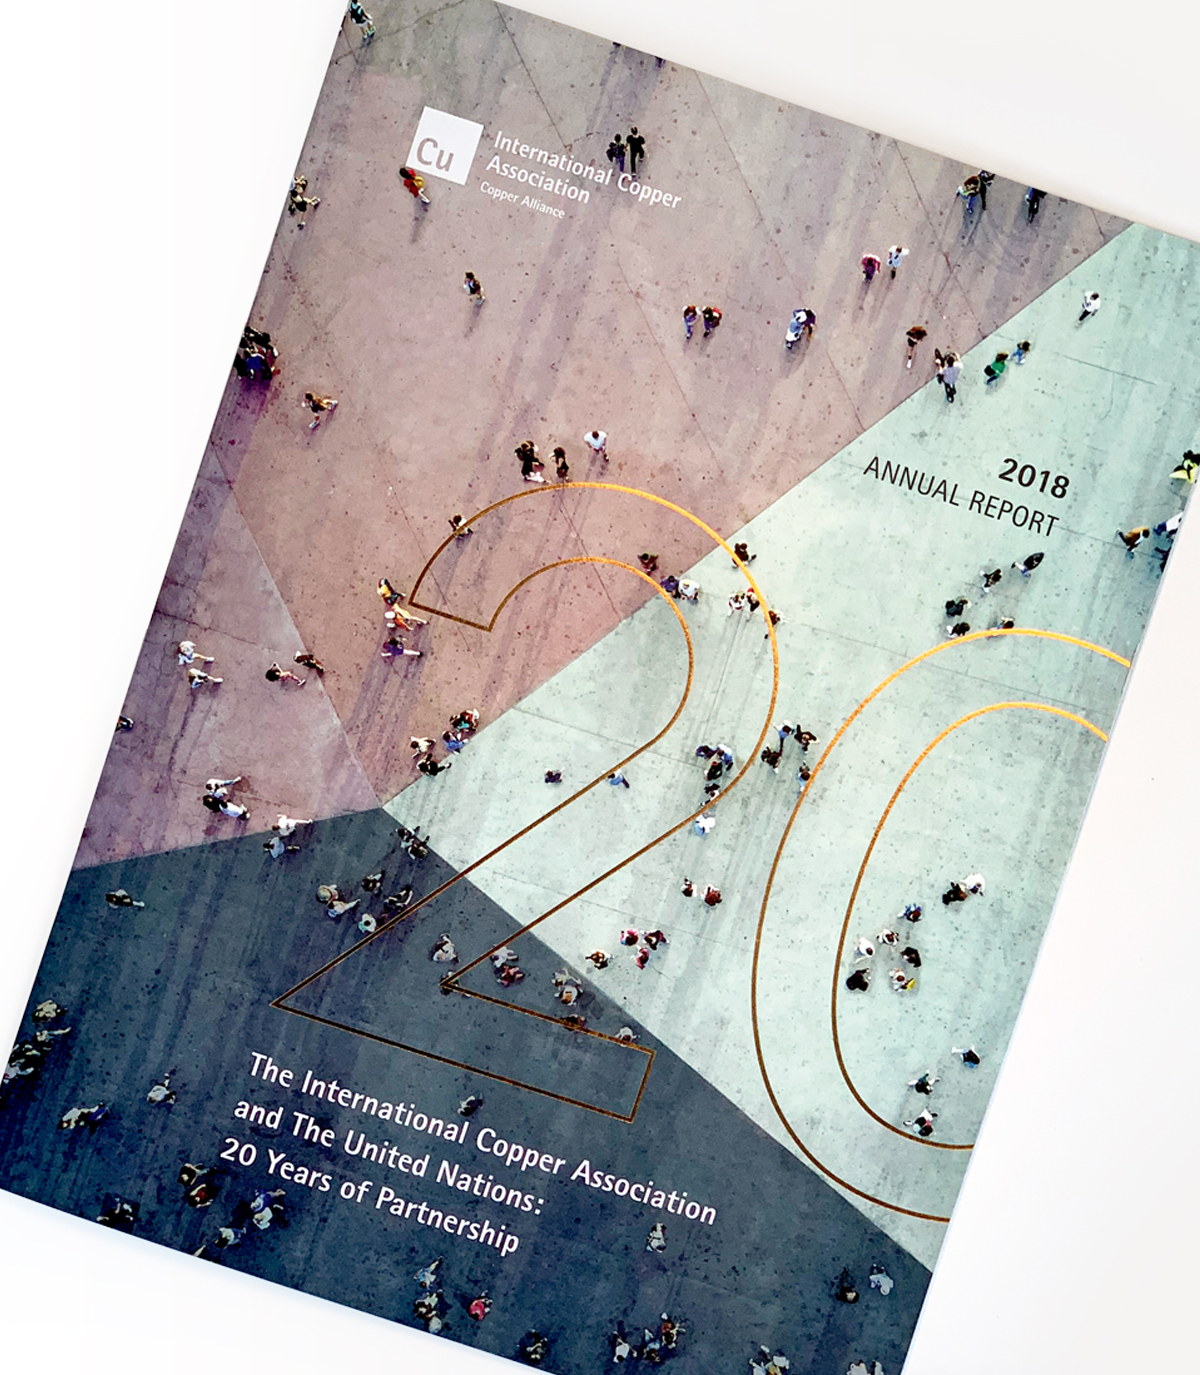 International Copper Association, Annual Report 2018. Designed by Annatto